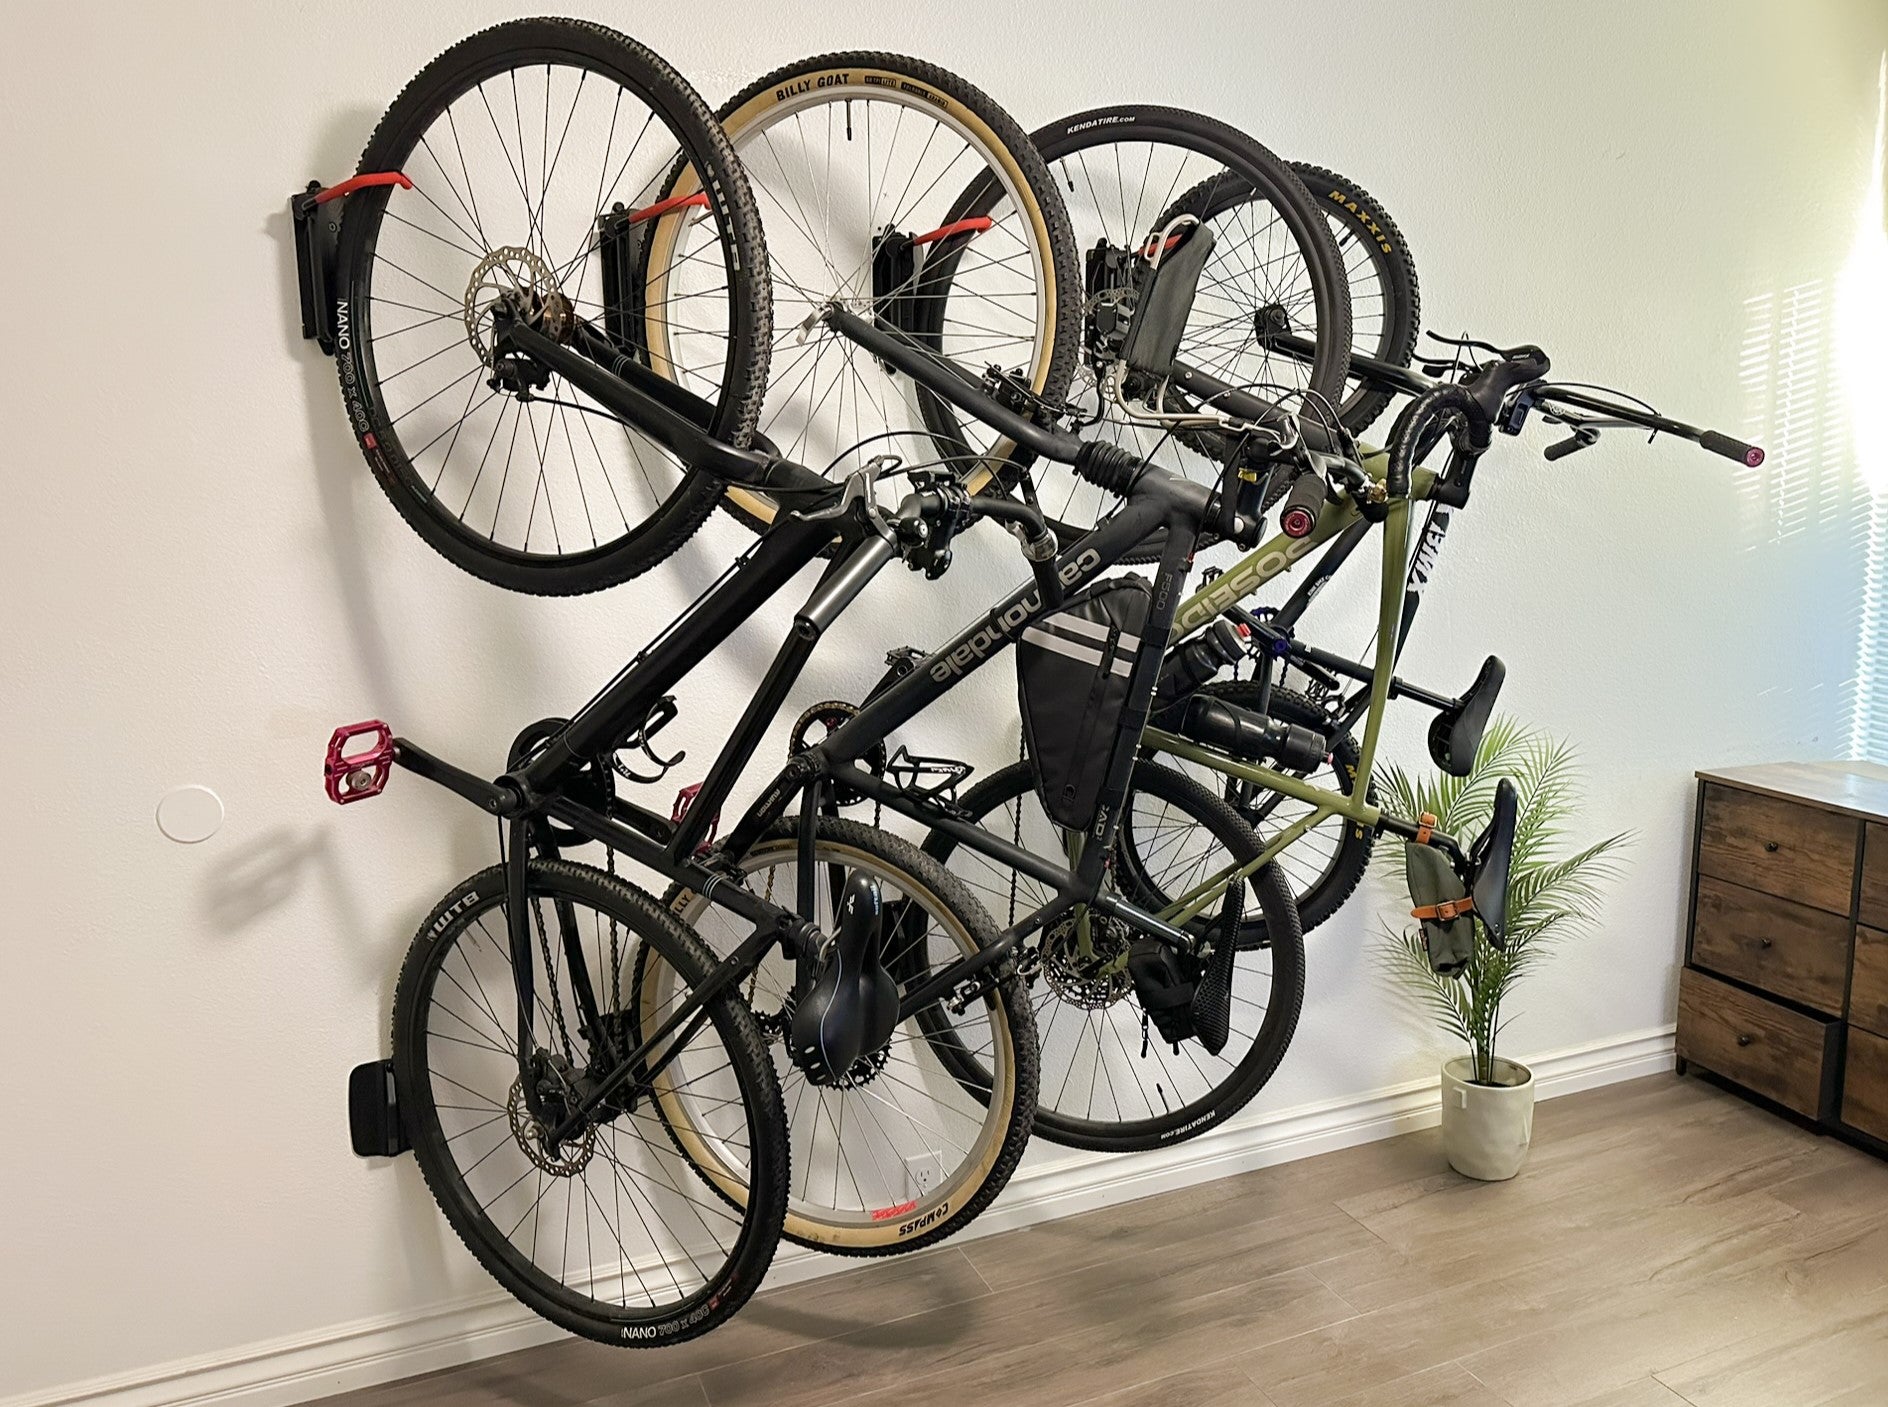 Storing Bicycles Indoors - Bike Wall Mount Challenge – Mount-It!